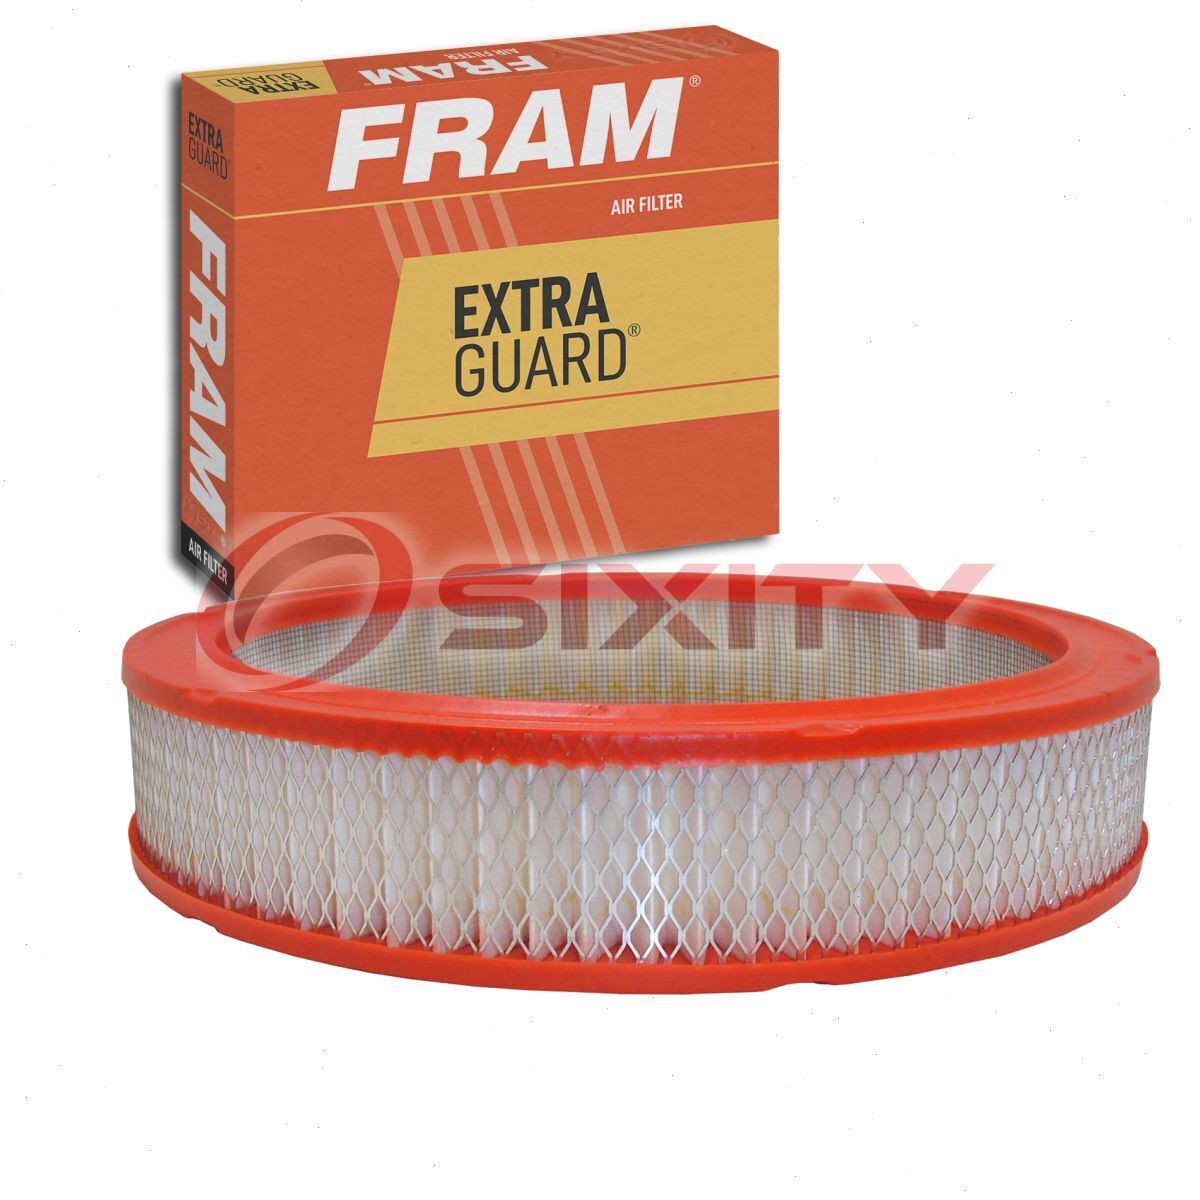 FRAM Extra Guard Air Filter for 1968 Pontiac Acadian Intake Inlet Manifold gn